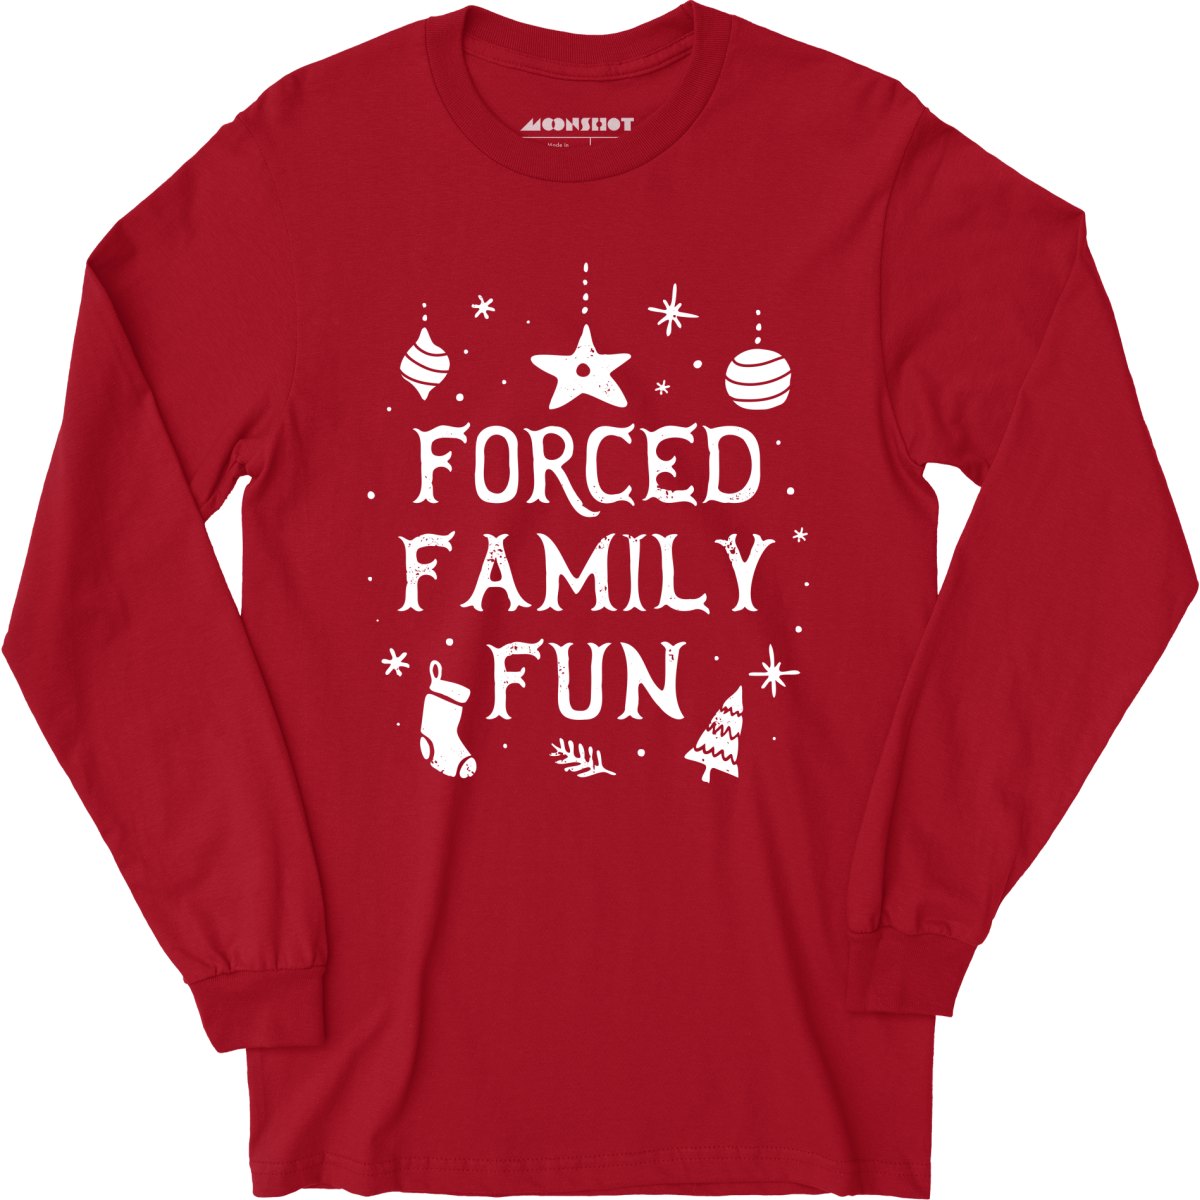 Forced Family Fun - Long Sleeve T-Shirt